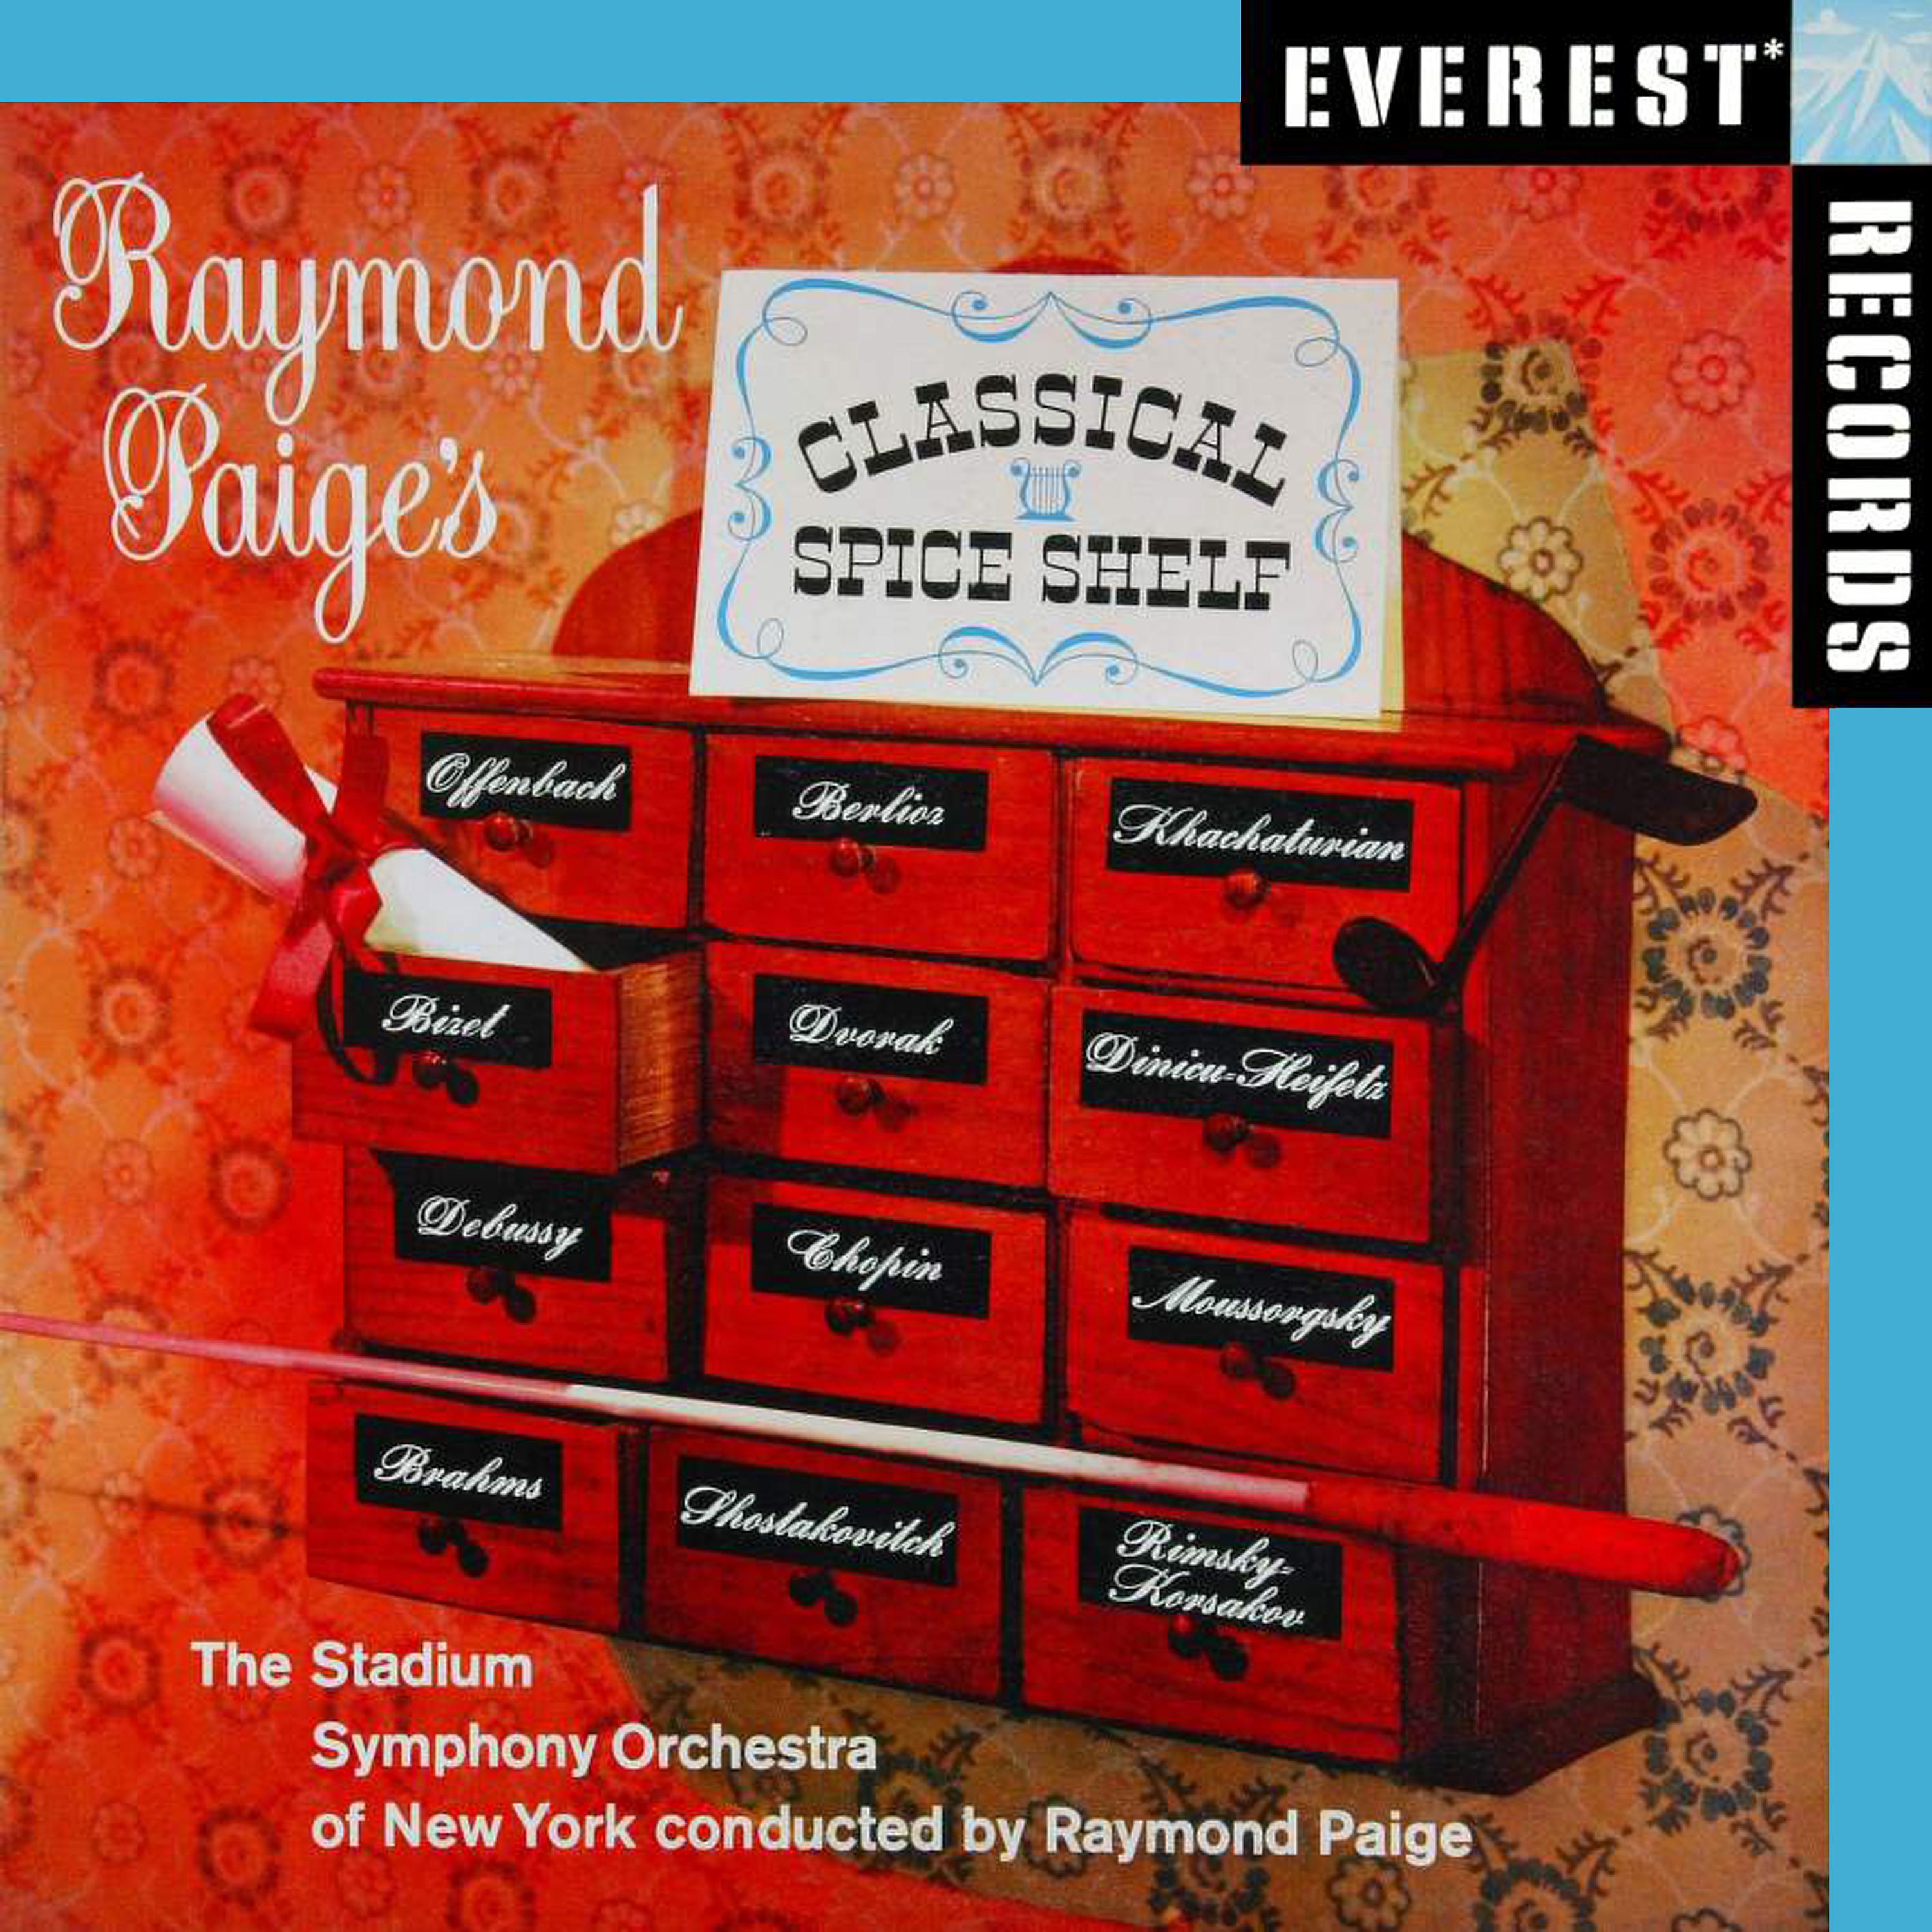 Постер альбома Raymond Paige's Classical Spice Shelf